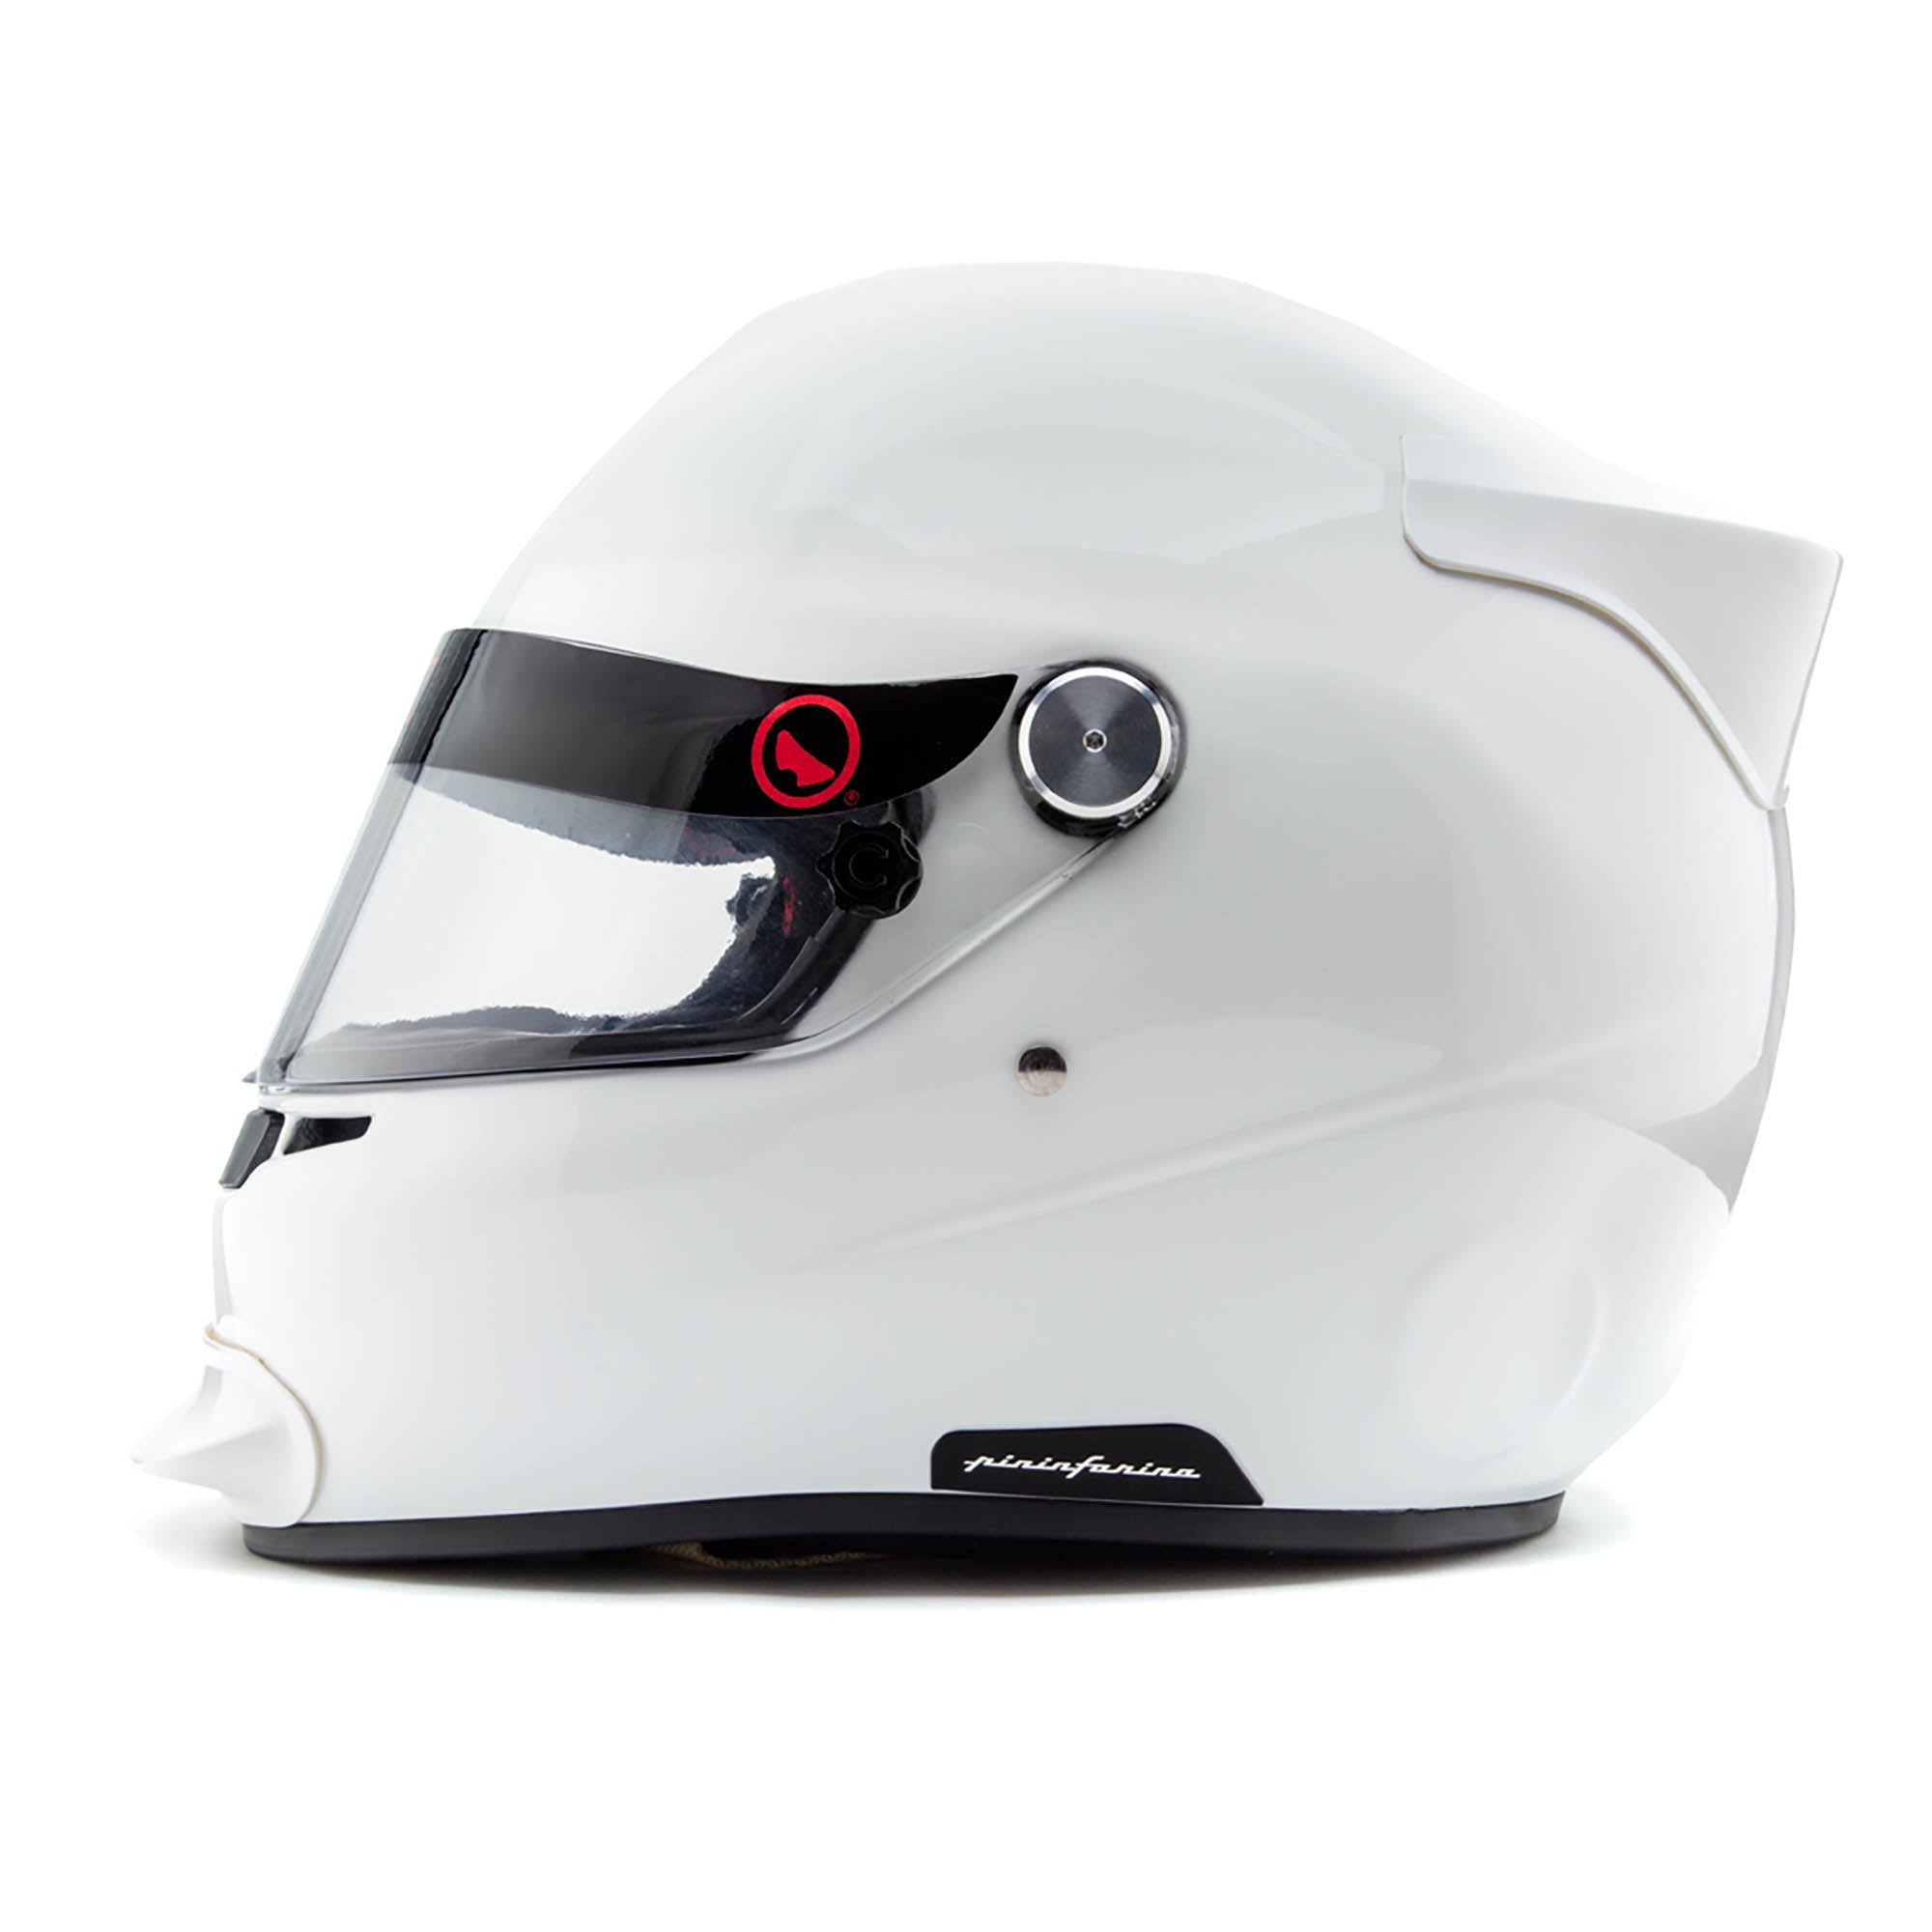 Roux Pininfarina Karting Helmet